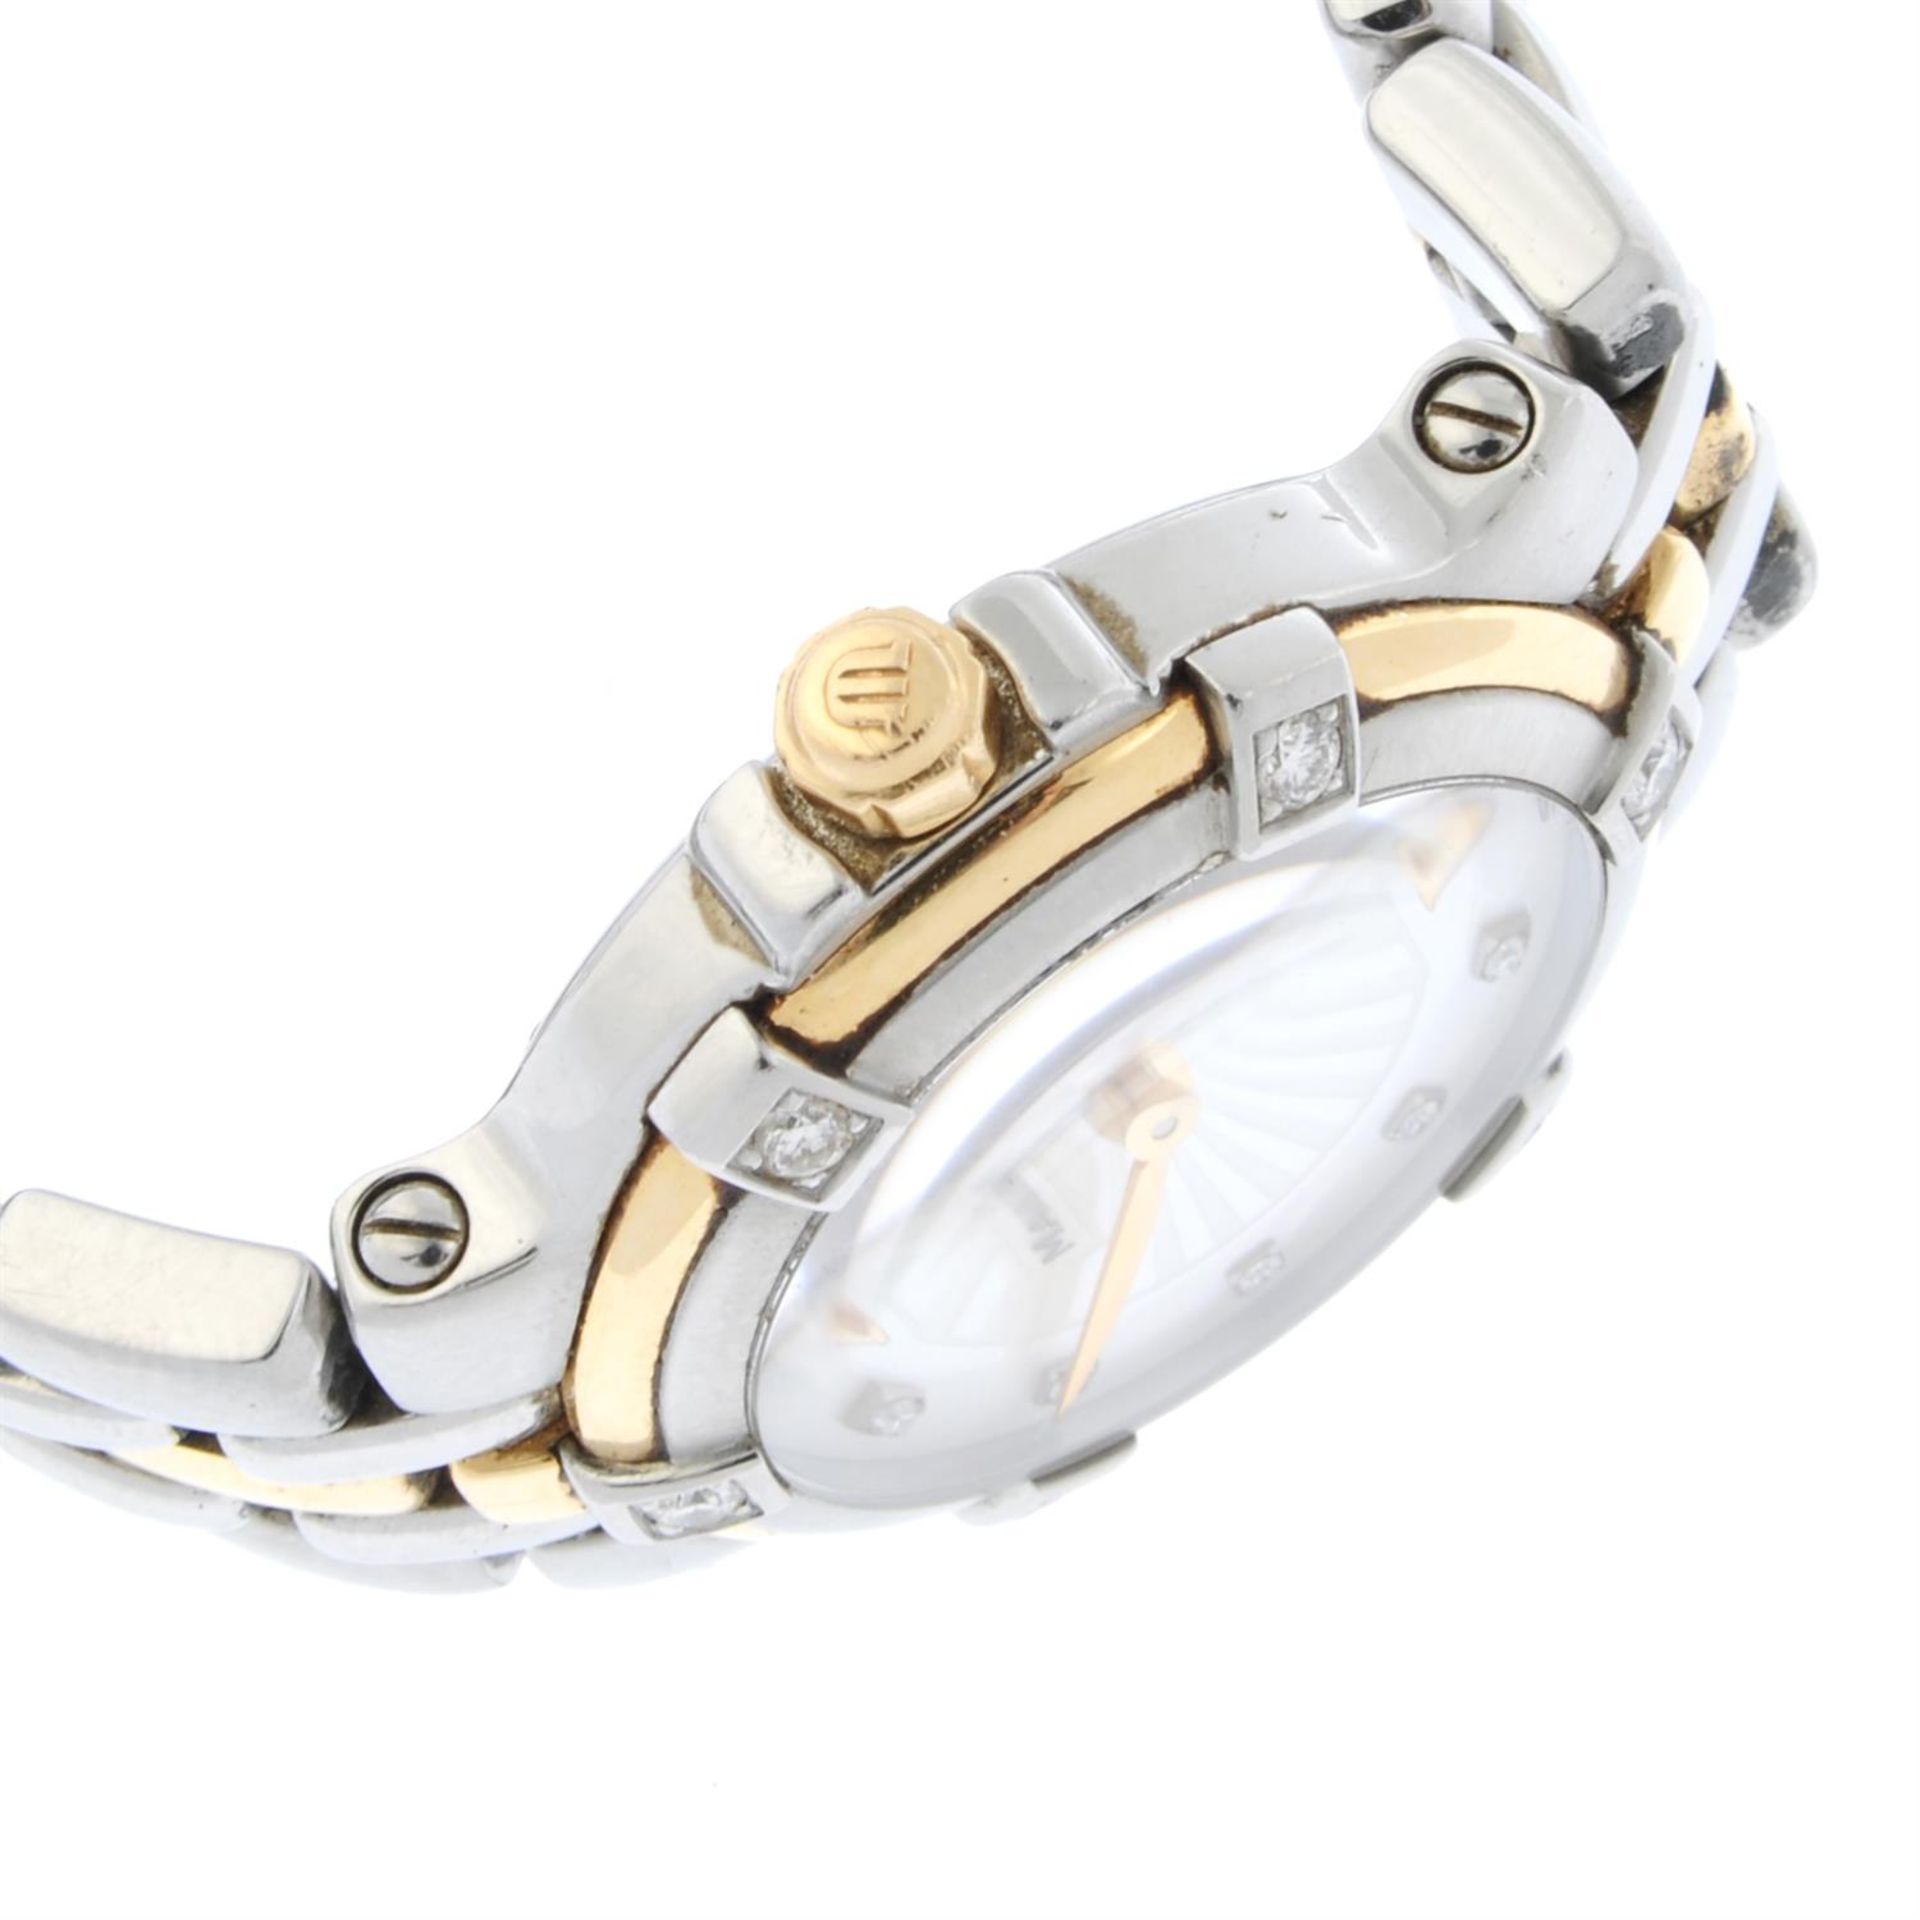 MAURICE LACROIX - a bi-metal bracelet watch, 24mm. - Image 3 of 4